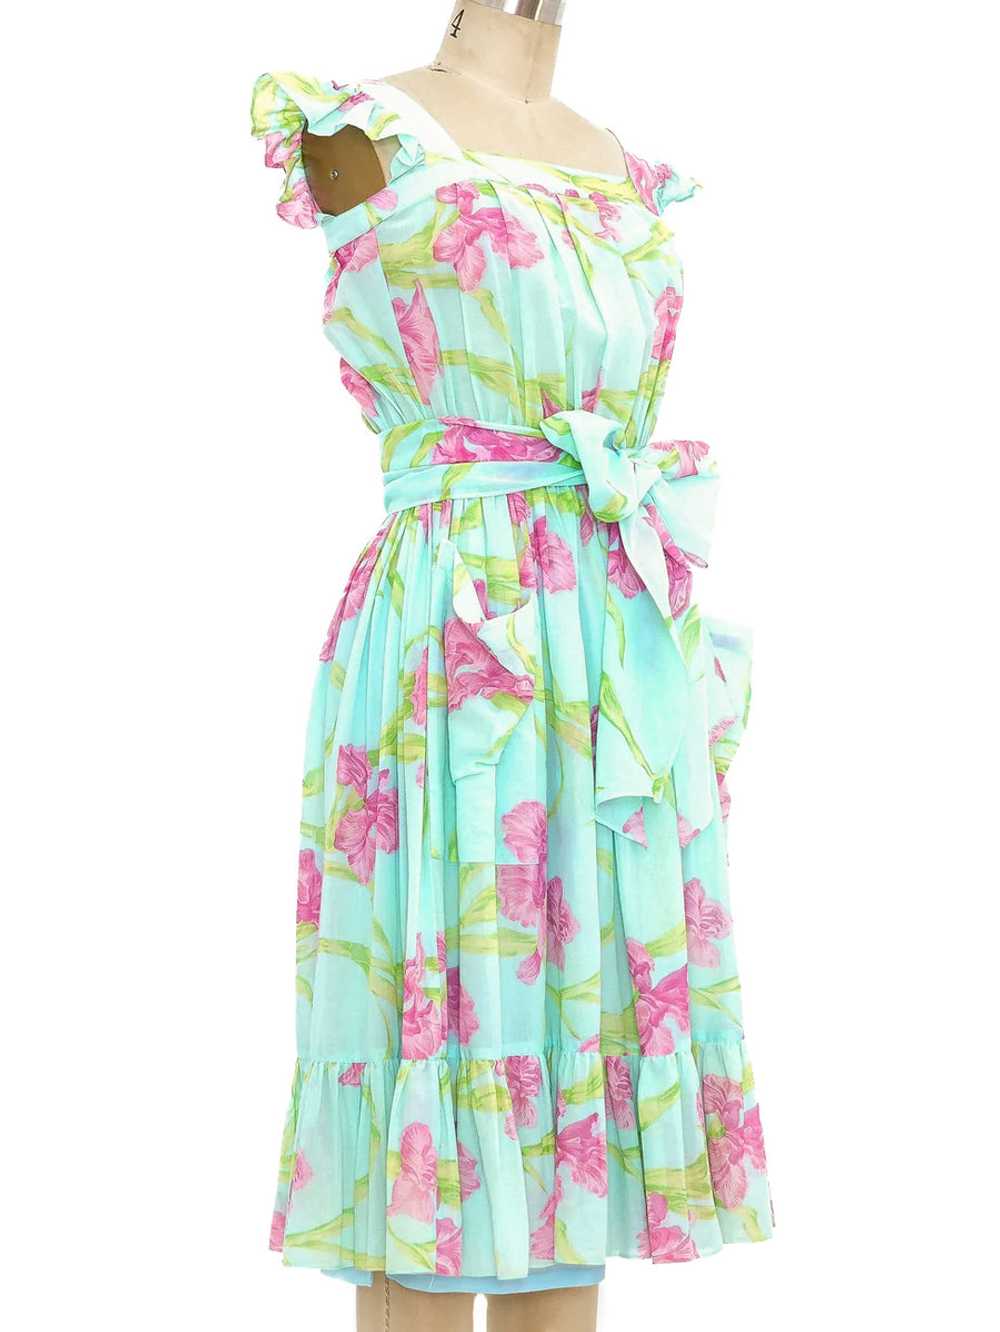 Thierry Mugler Floral Cotton Gauze Ruffle Dress - image 3